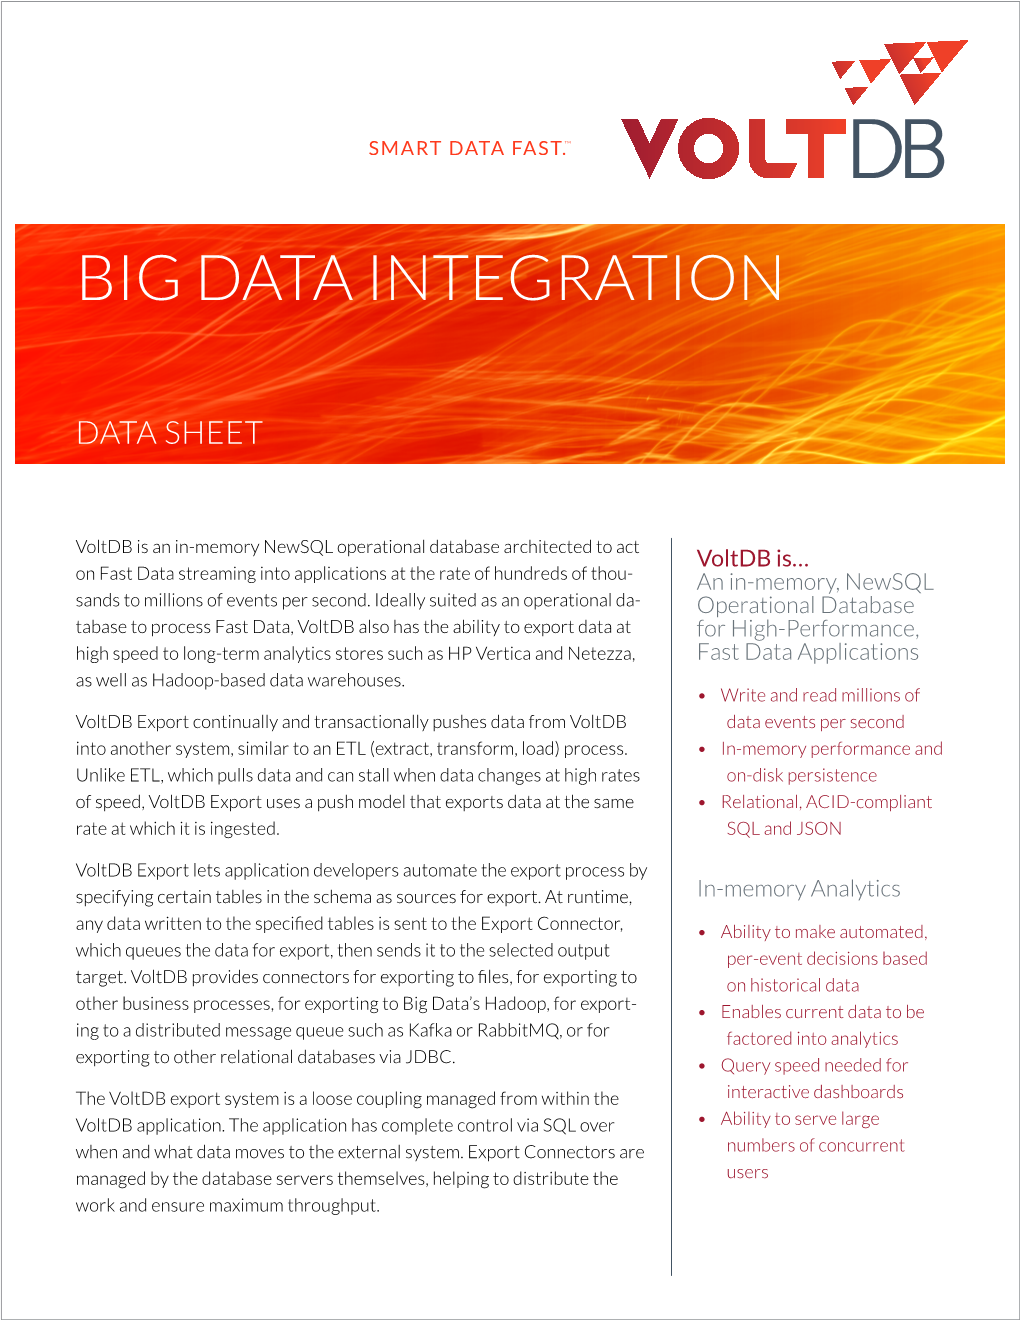 Big Data Integration